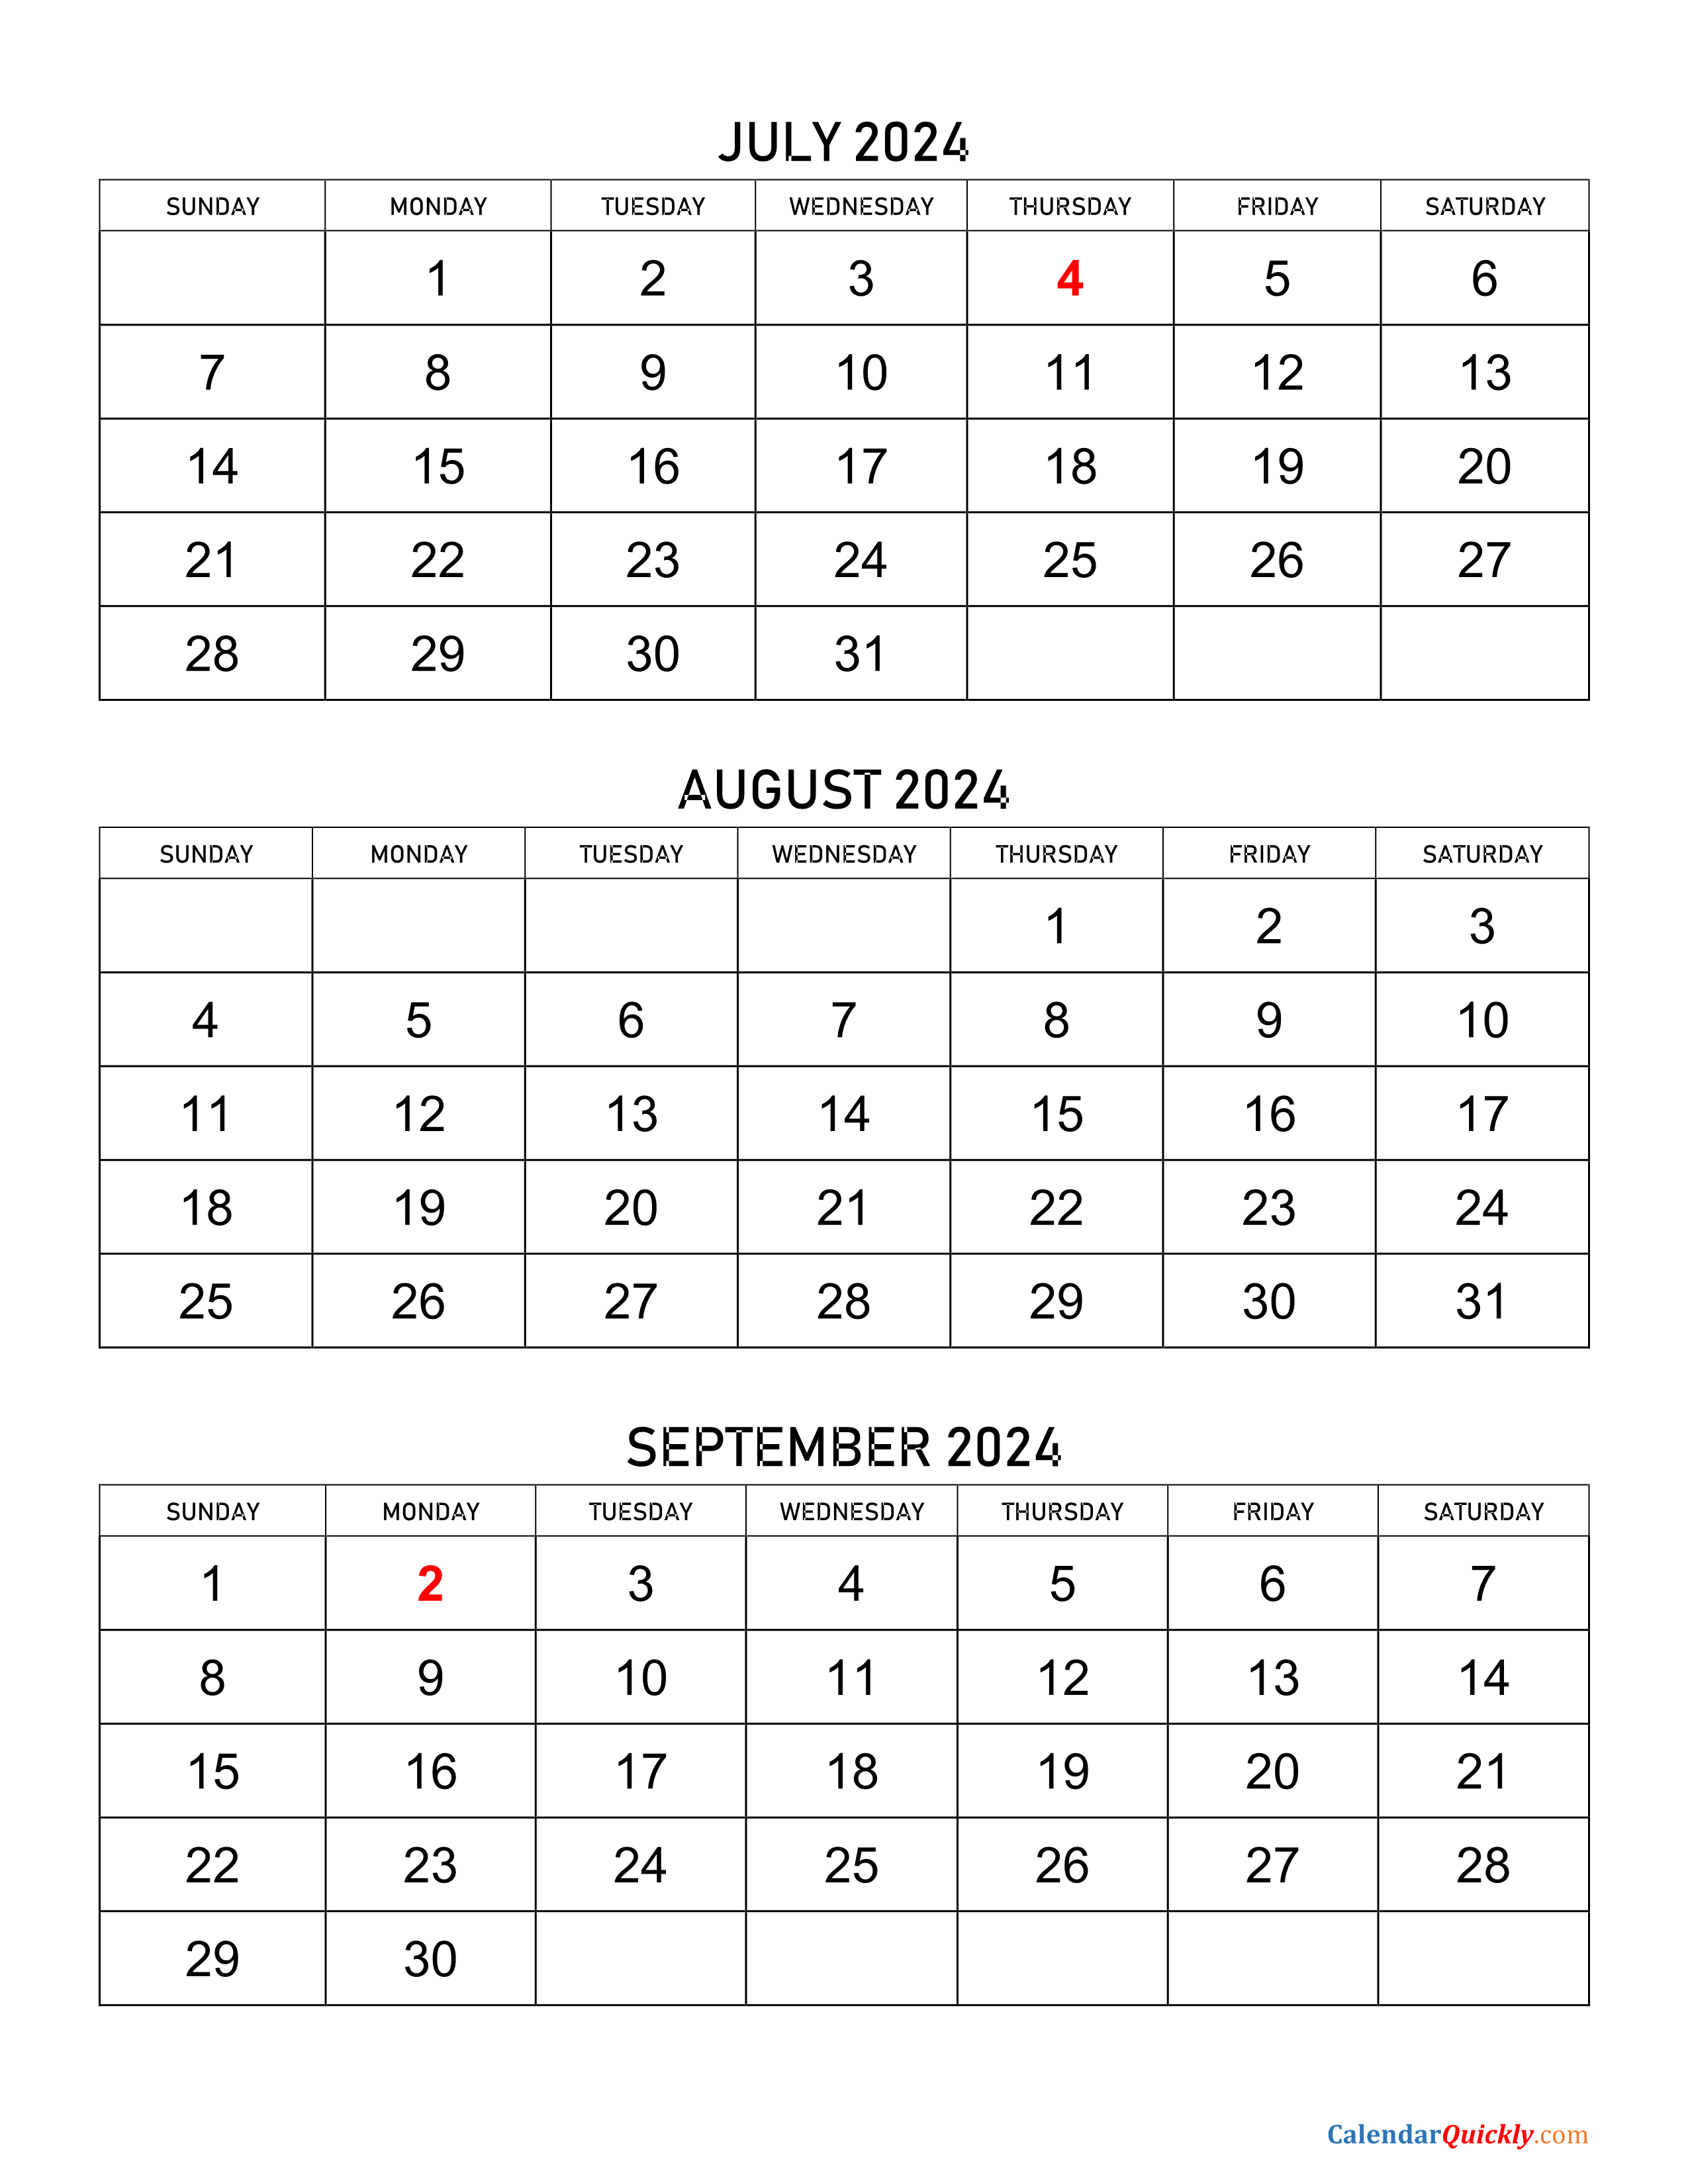 Calendar September 2024 Printable Free Calendar 2024 All Holidays - Free Printable 2024 Calendar September 24calendars